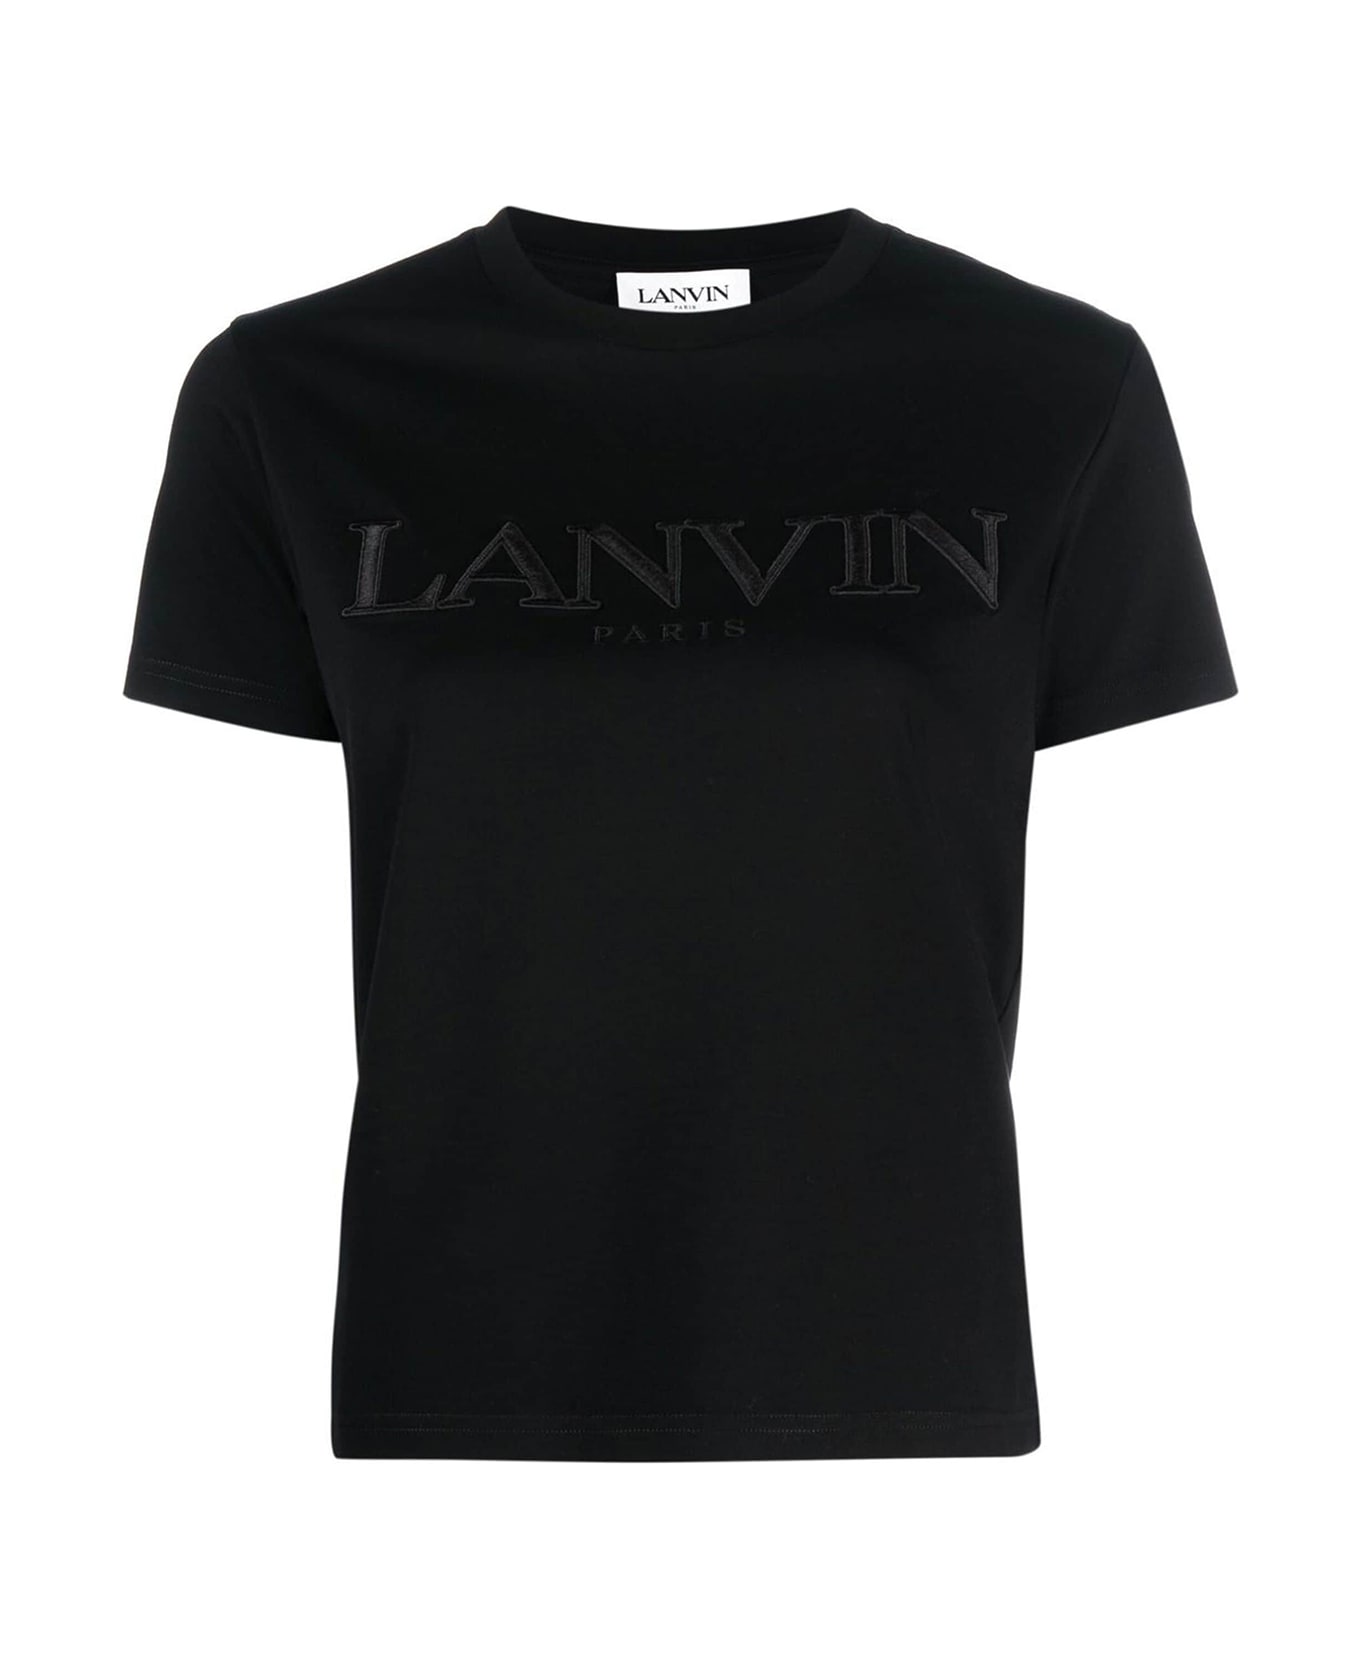 Lanvin T-Shirt - BLACK